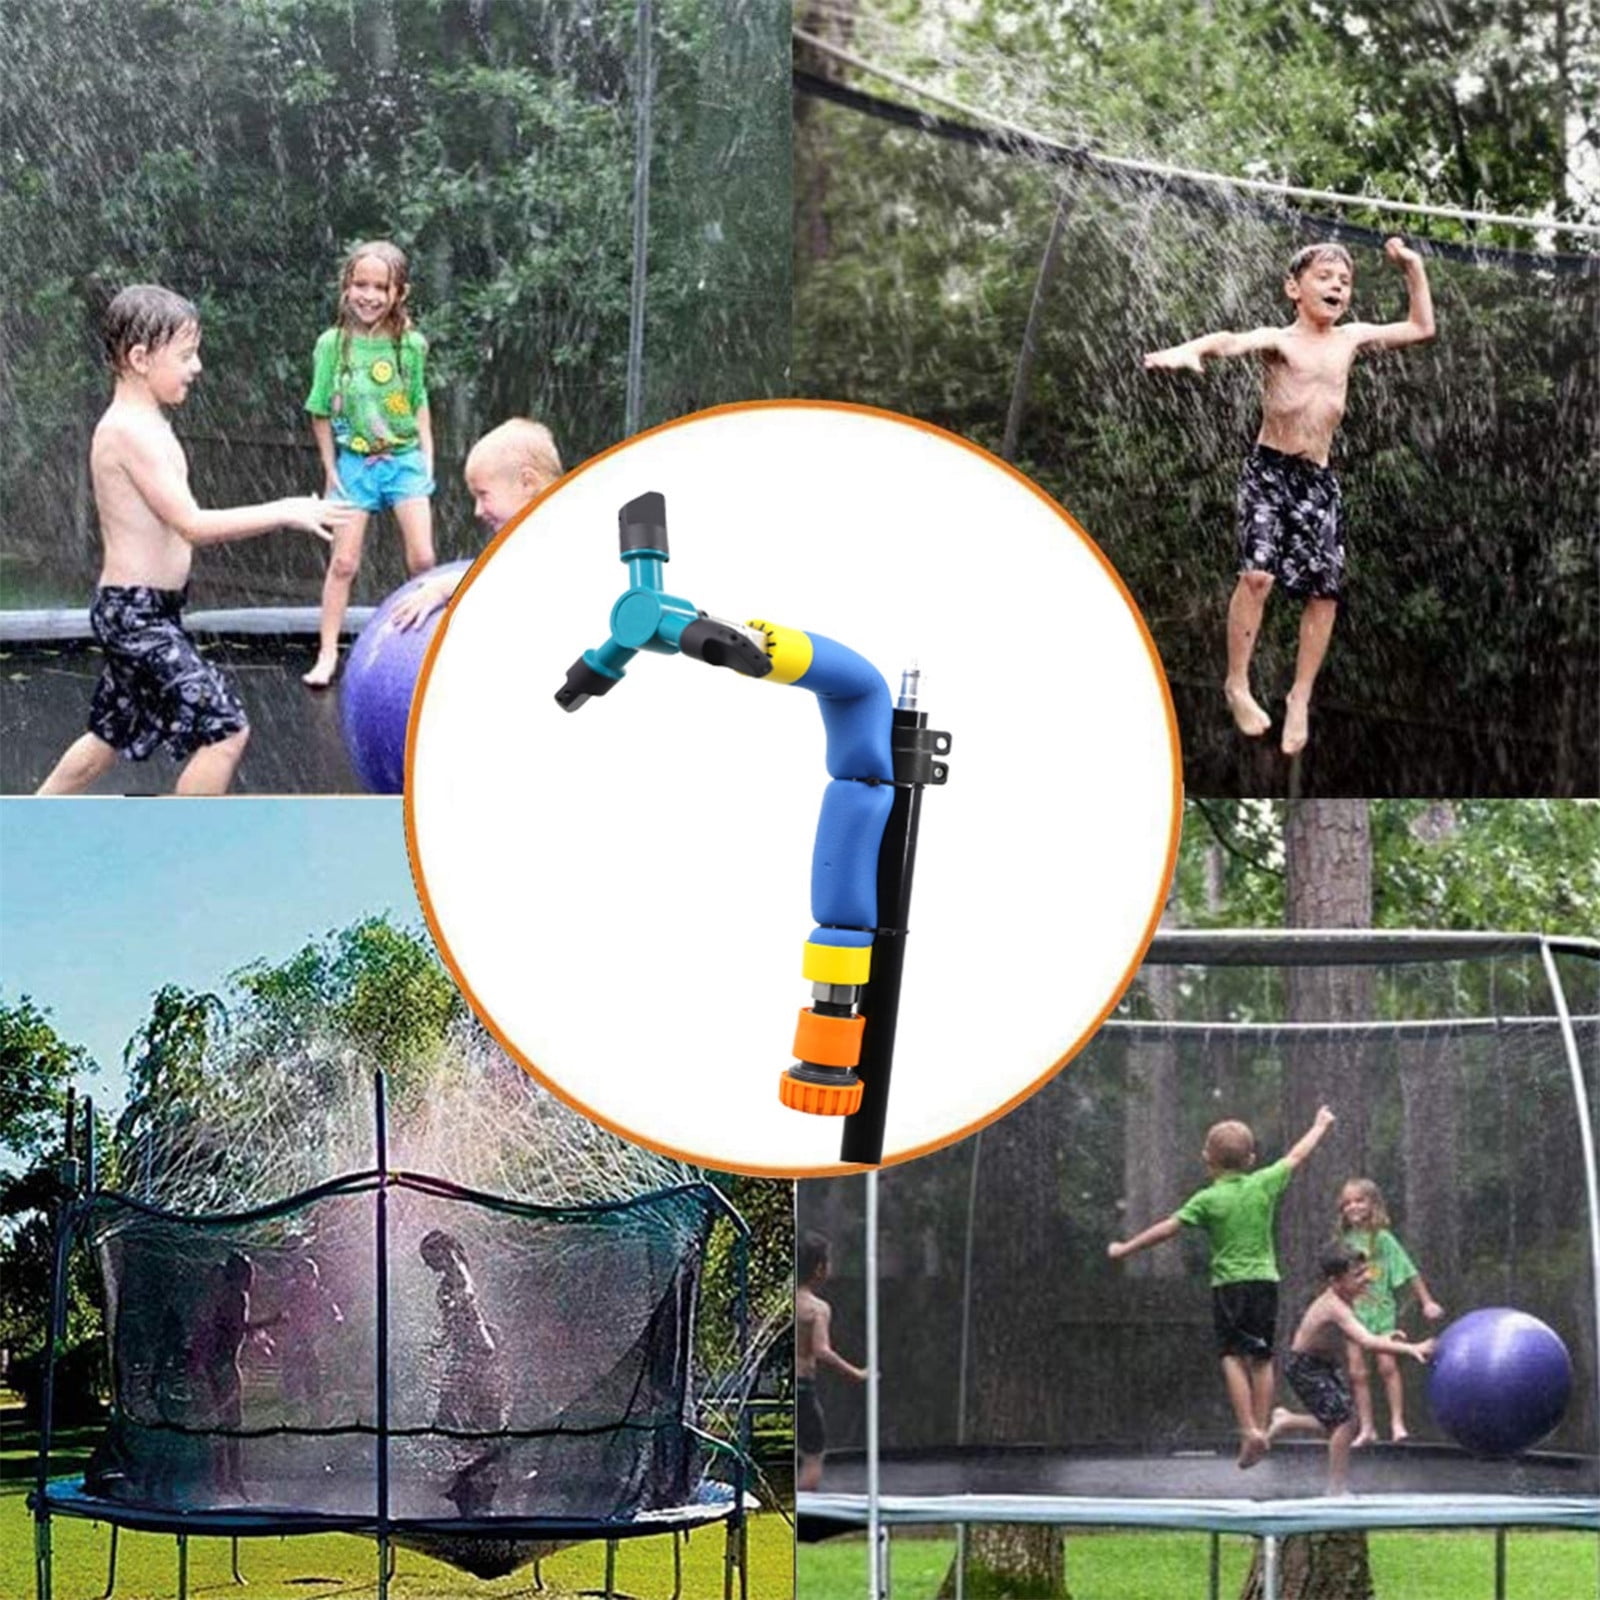 Bzoosio Kids Fun Summer Outdoor Water Park-Game Sprinkler - Waterpark Toys for Boys